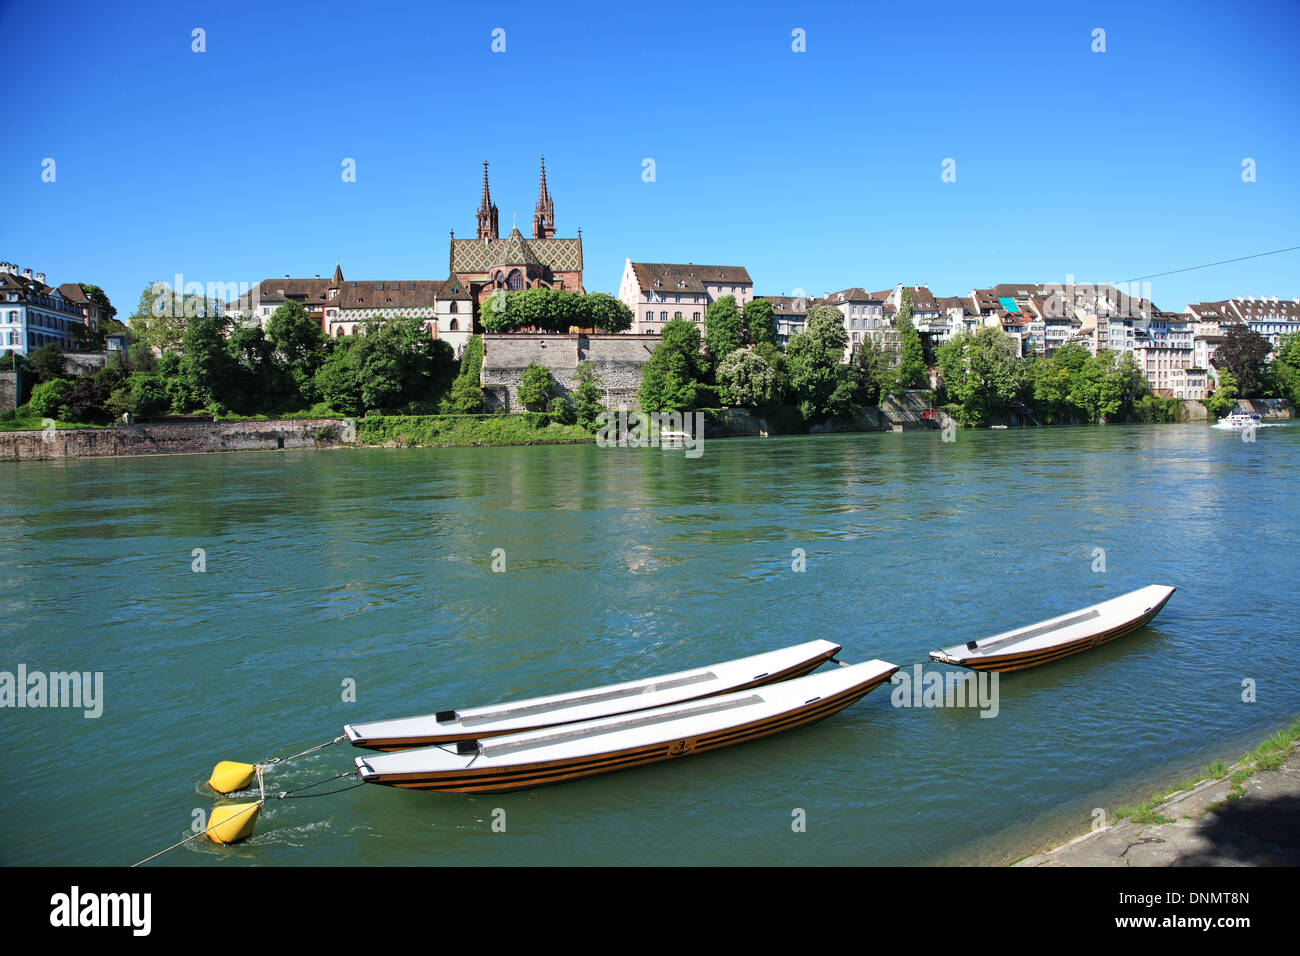 Switzerland, Basel, Munster at the River Rhine Stock Photo